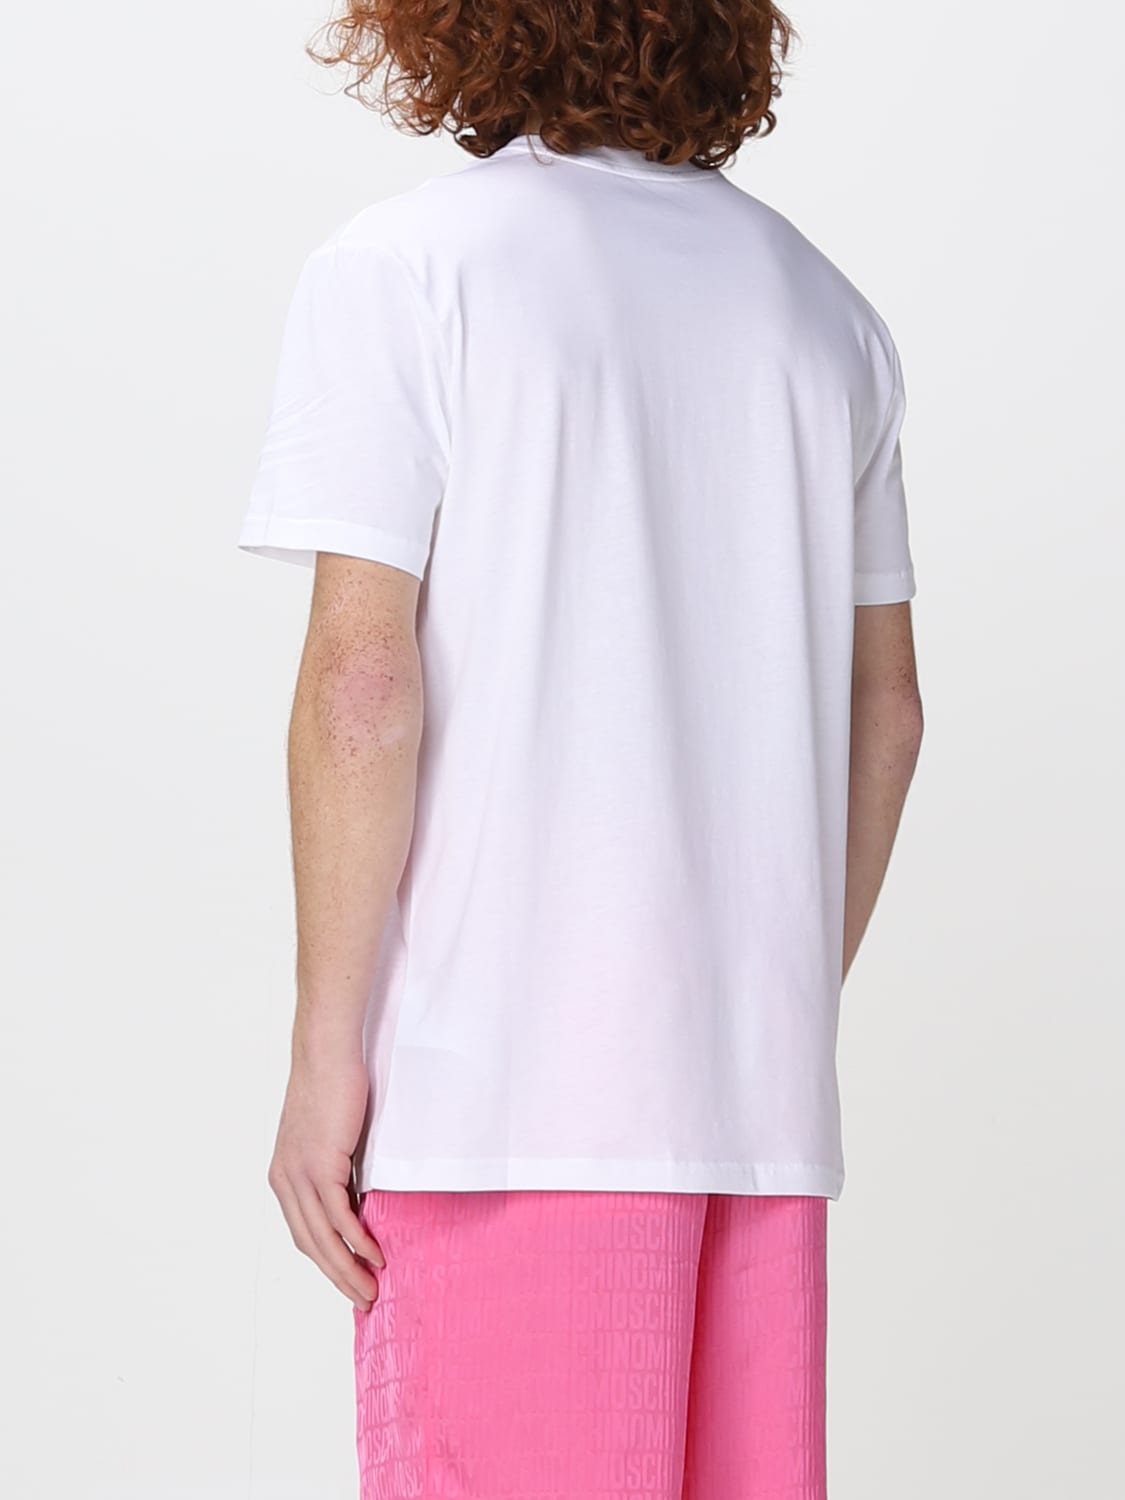  MOSCHINO Moda de lujo para hombre V070202401001 camiseta blanca